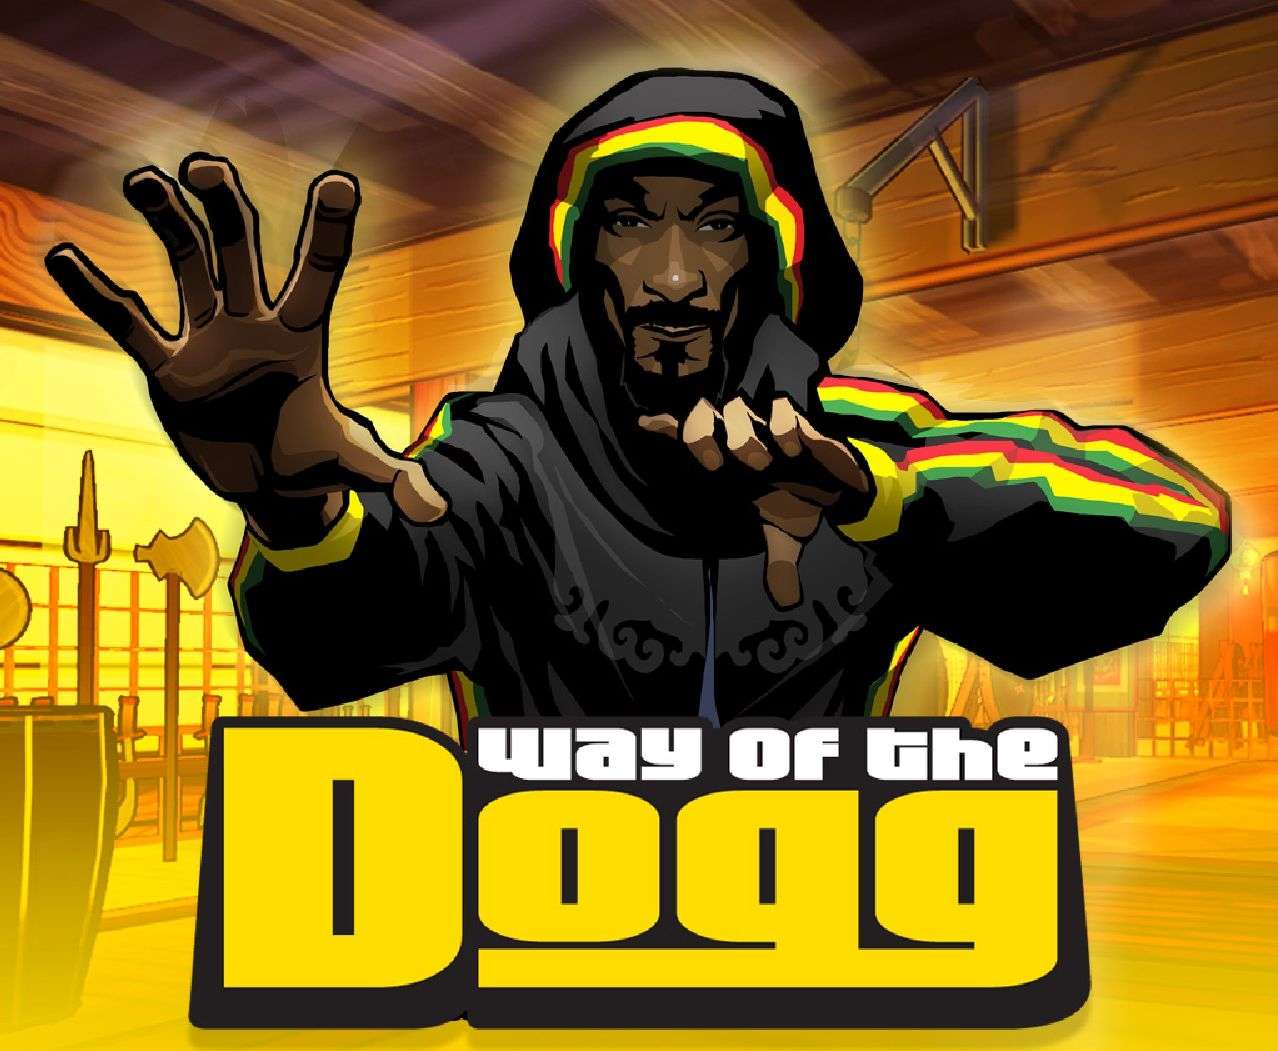 Way of the Dogg